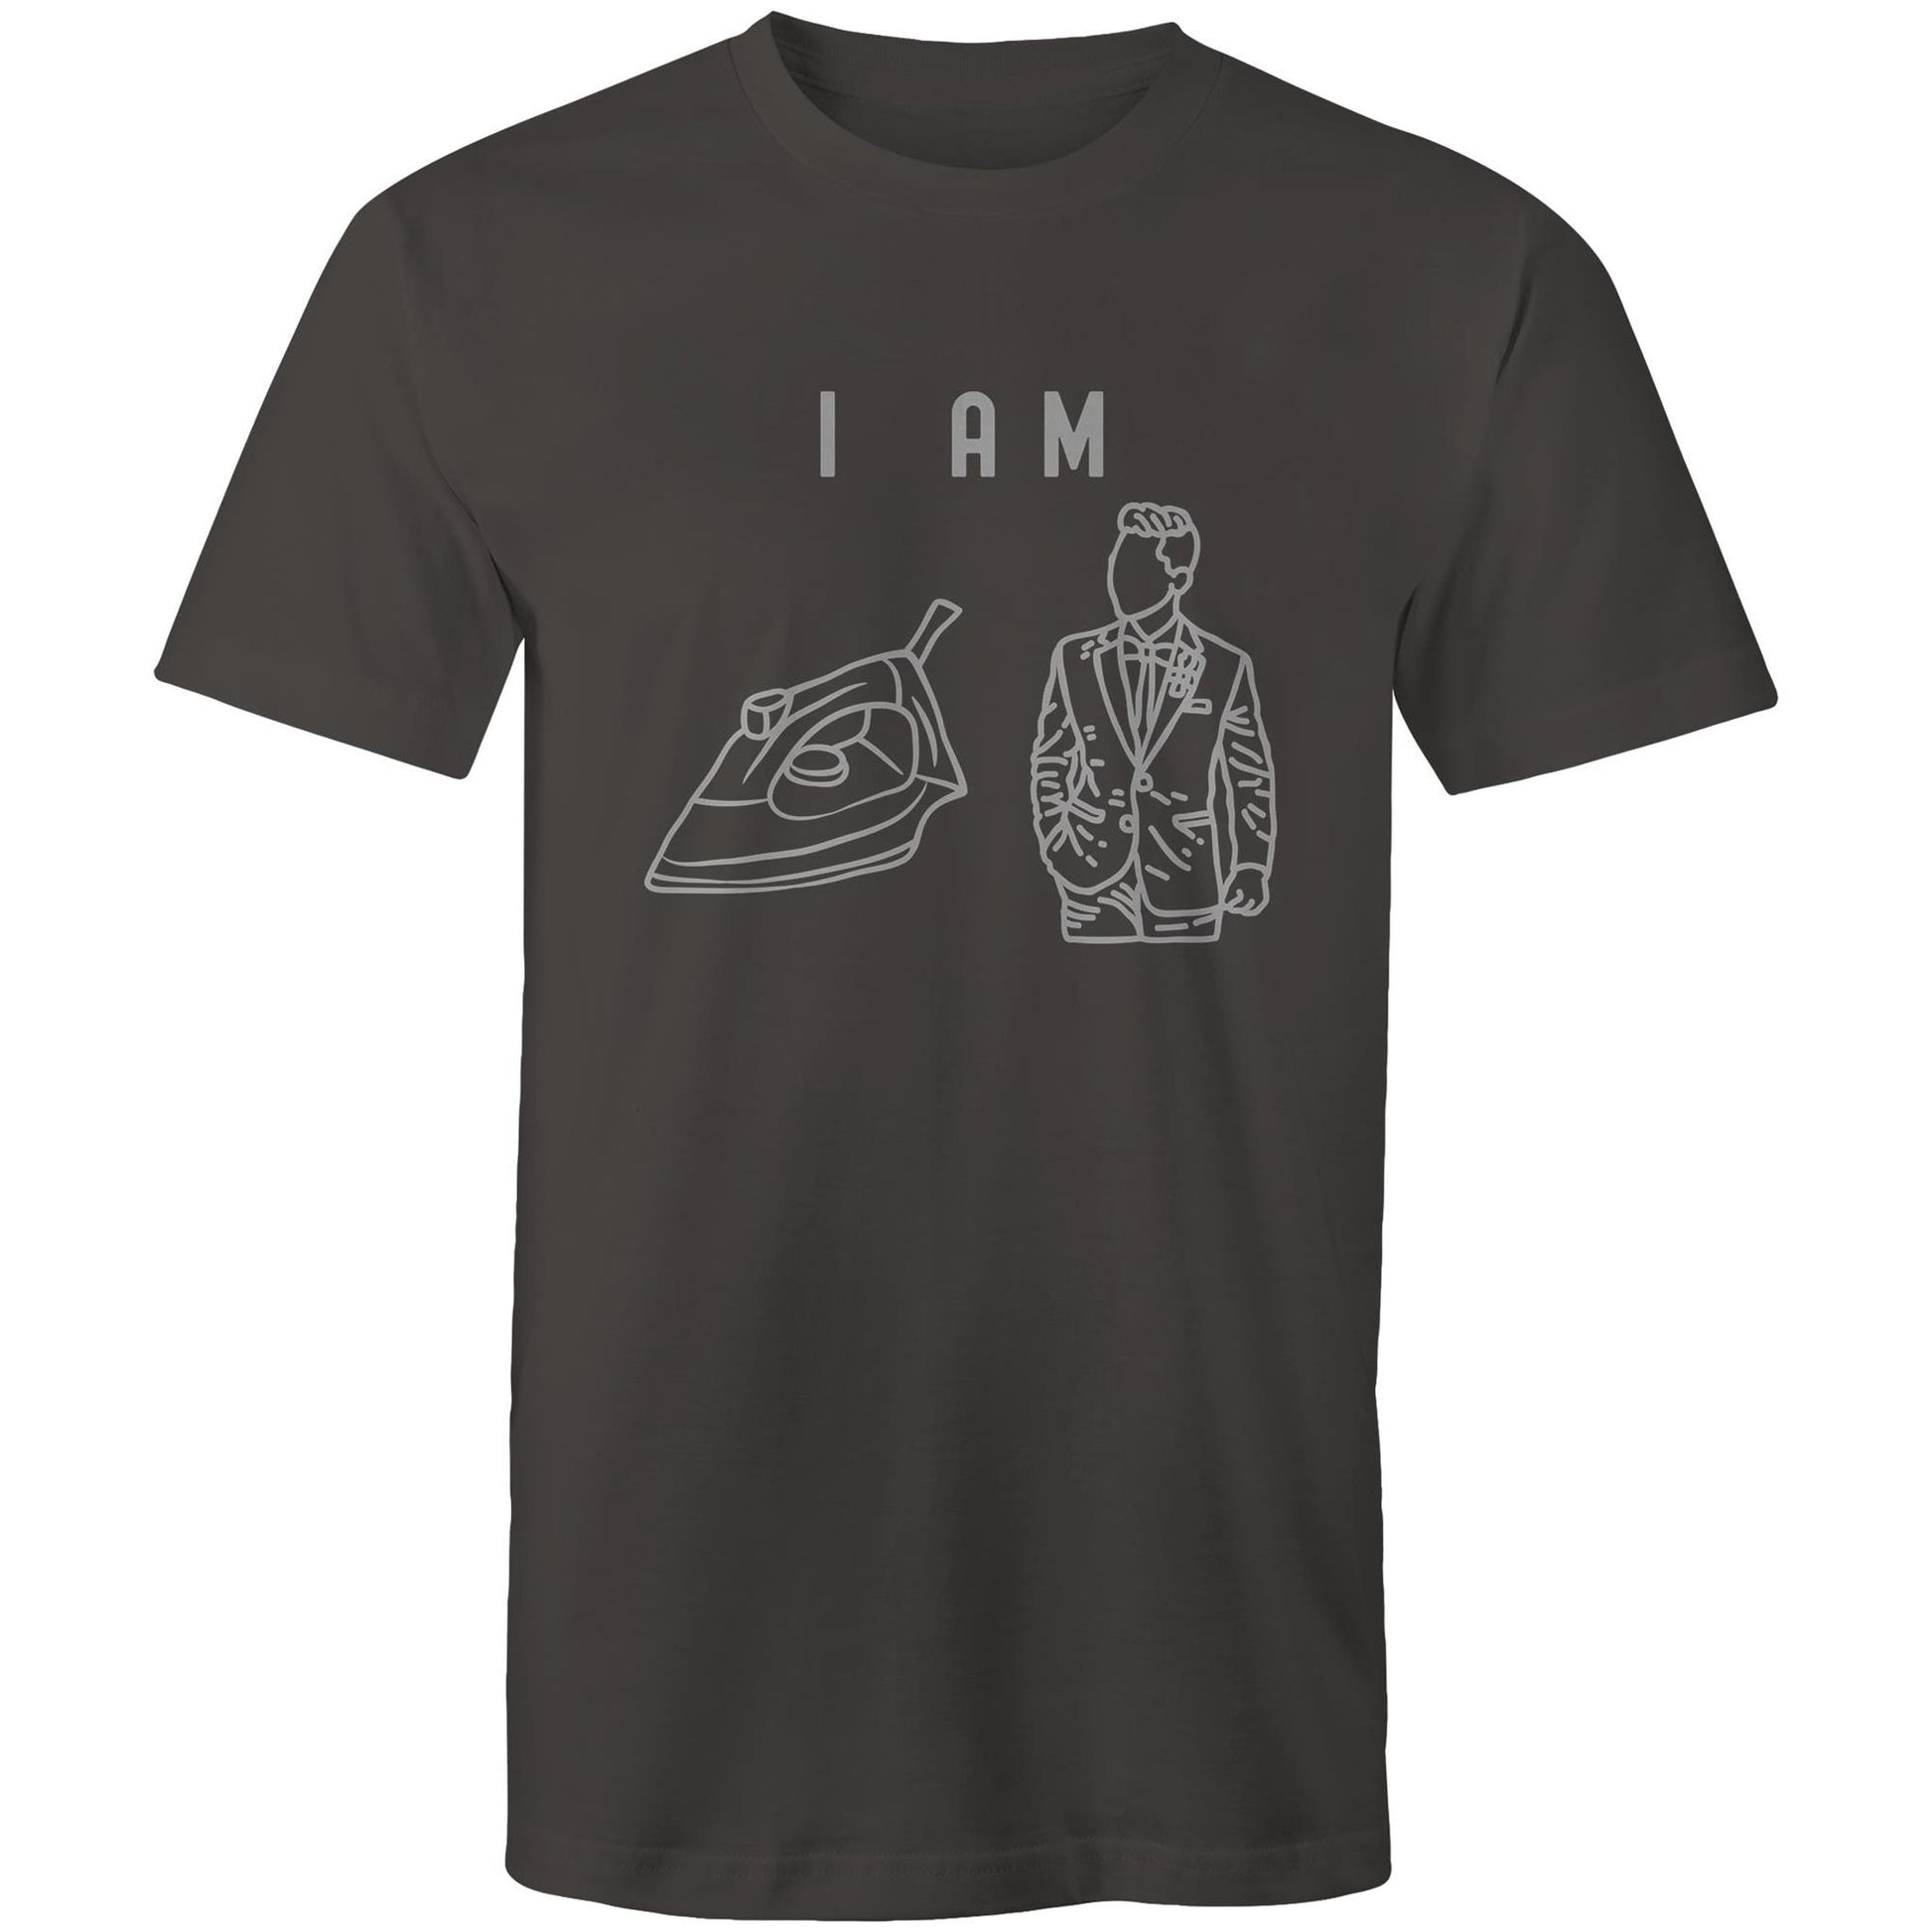 I Am Ironing Man - Mens T-Shirt Charcoal Mens T-shirt comic Funny